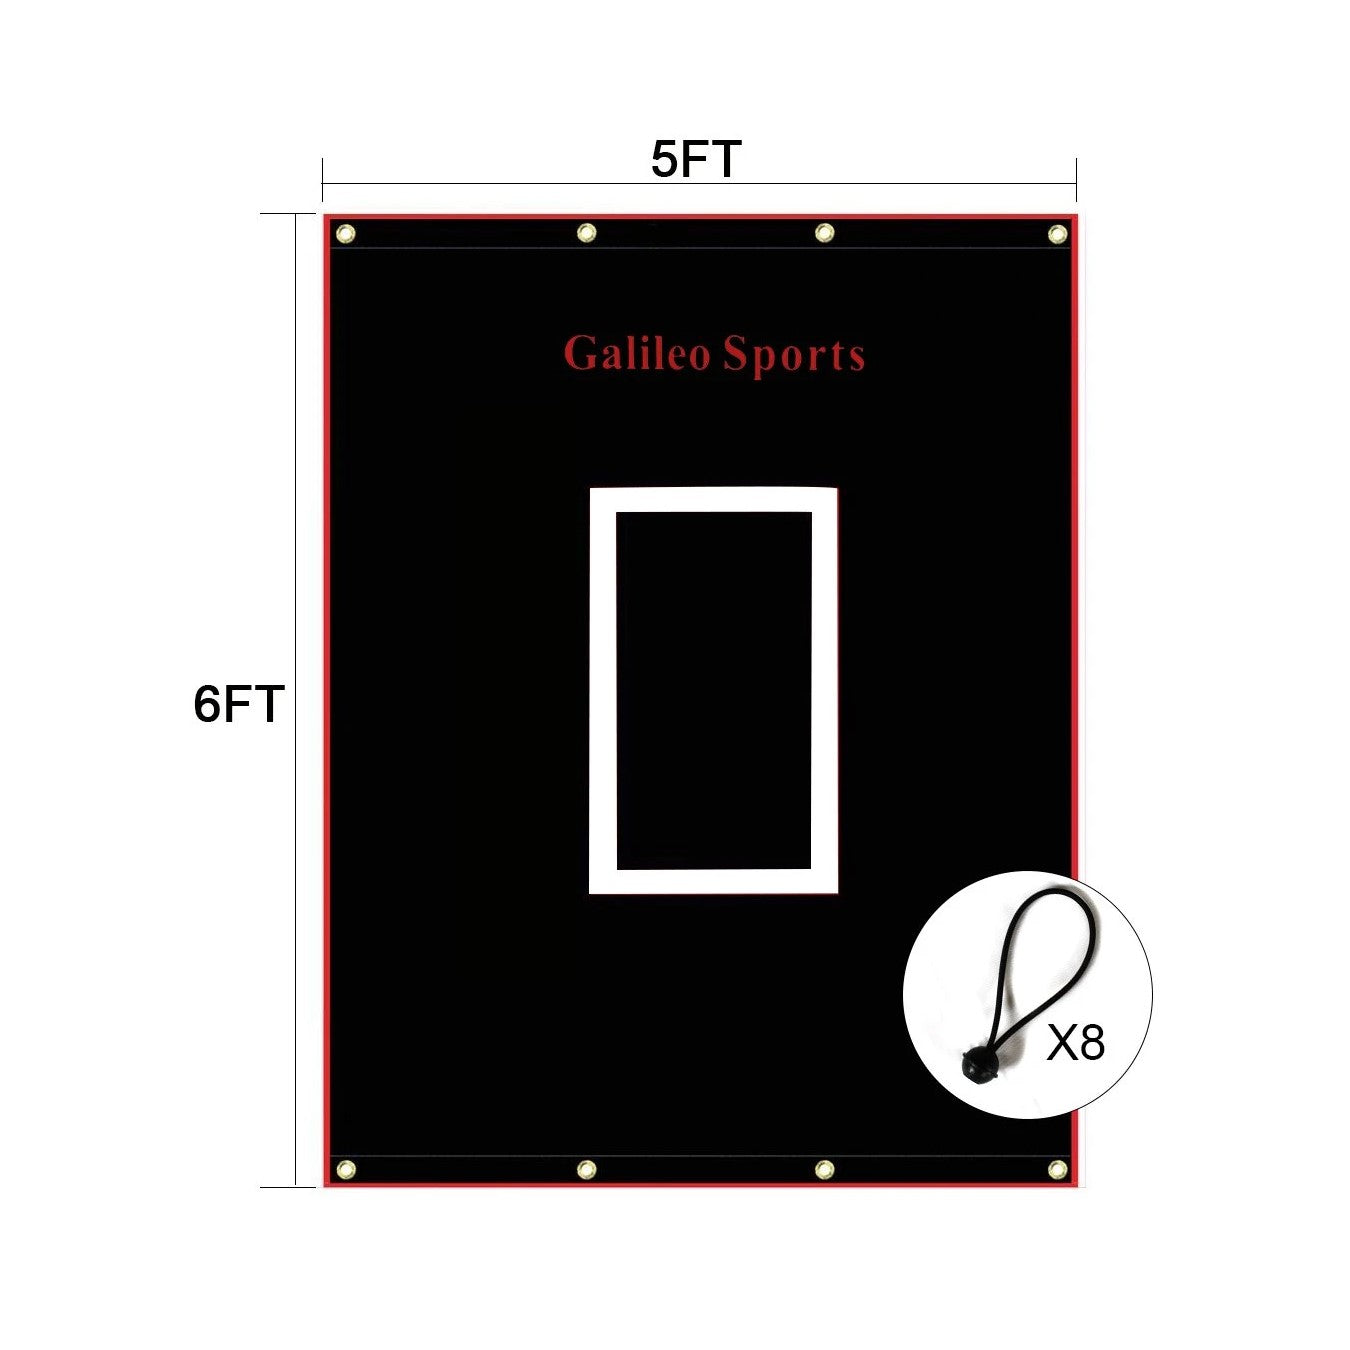 Galileo Softball Backstop Vinyl Heavy Duty Baseball Batting Cage Backstop Pitching Target Trainer Backstop Net Saver